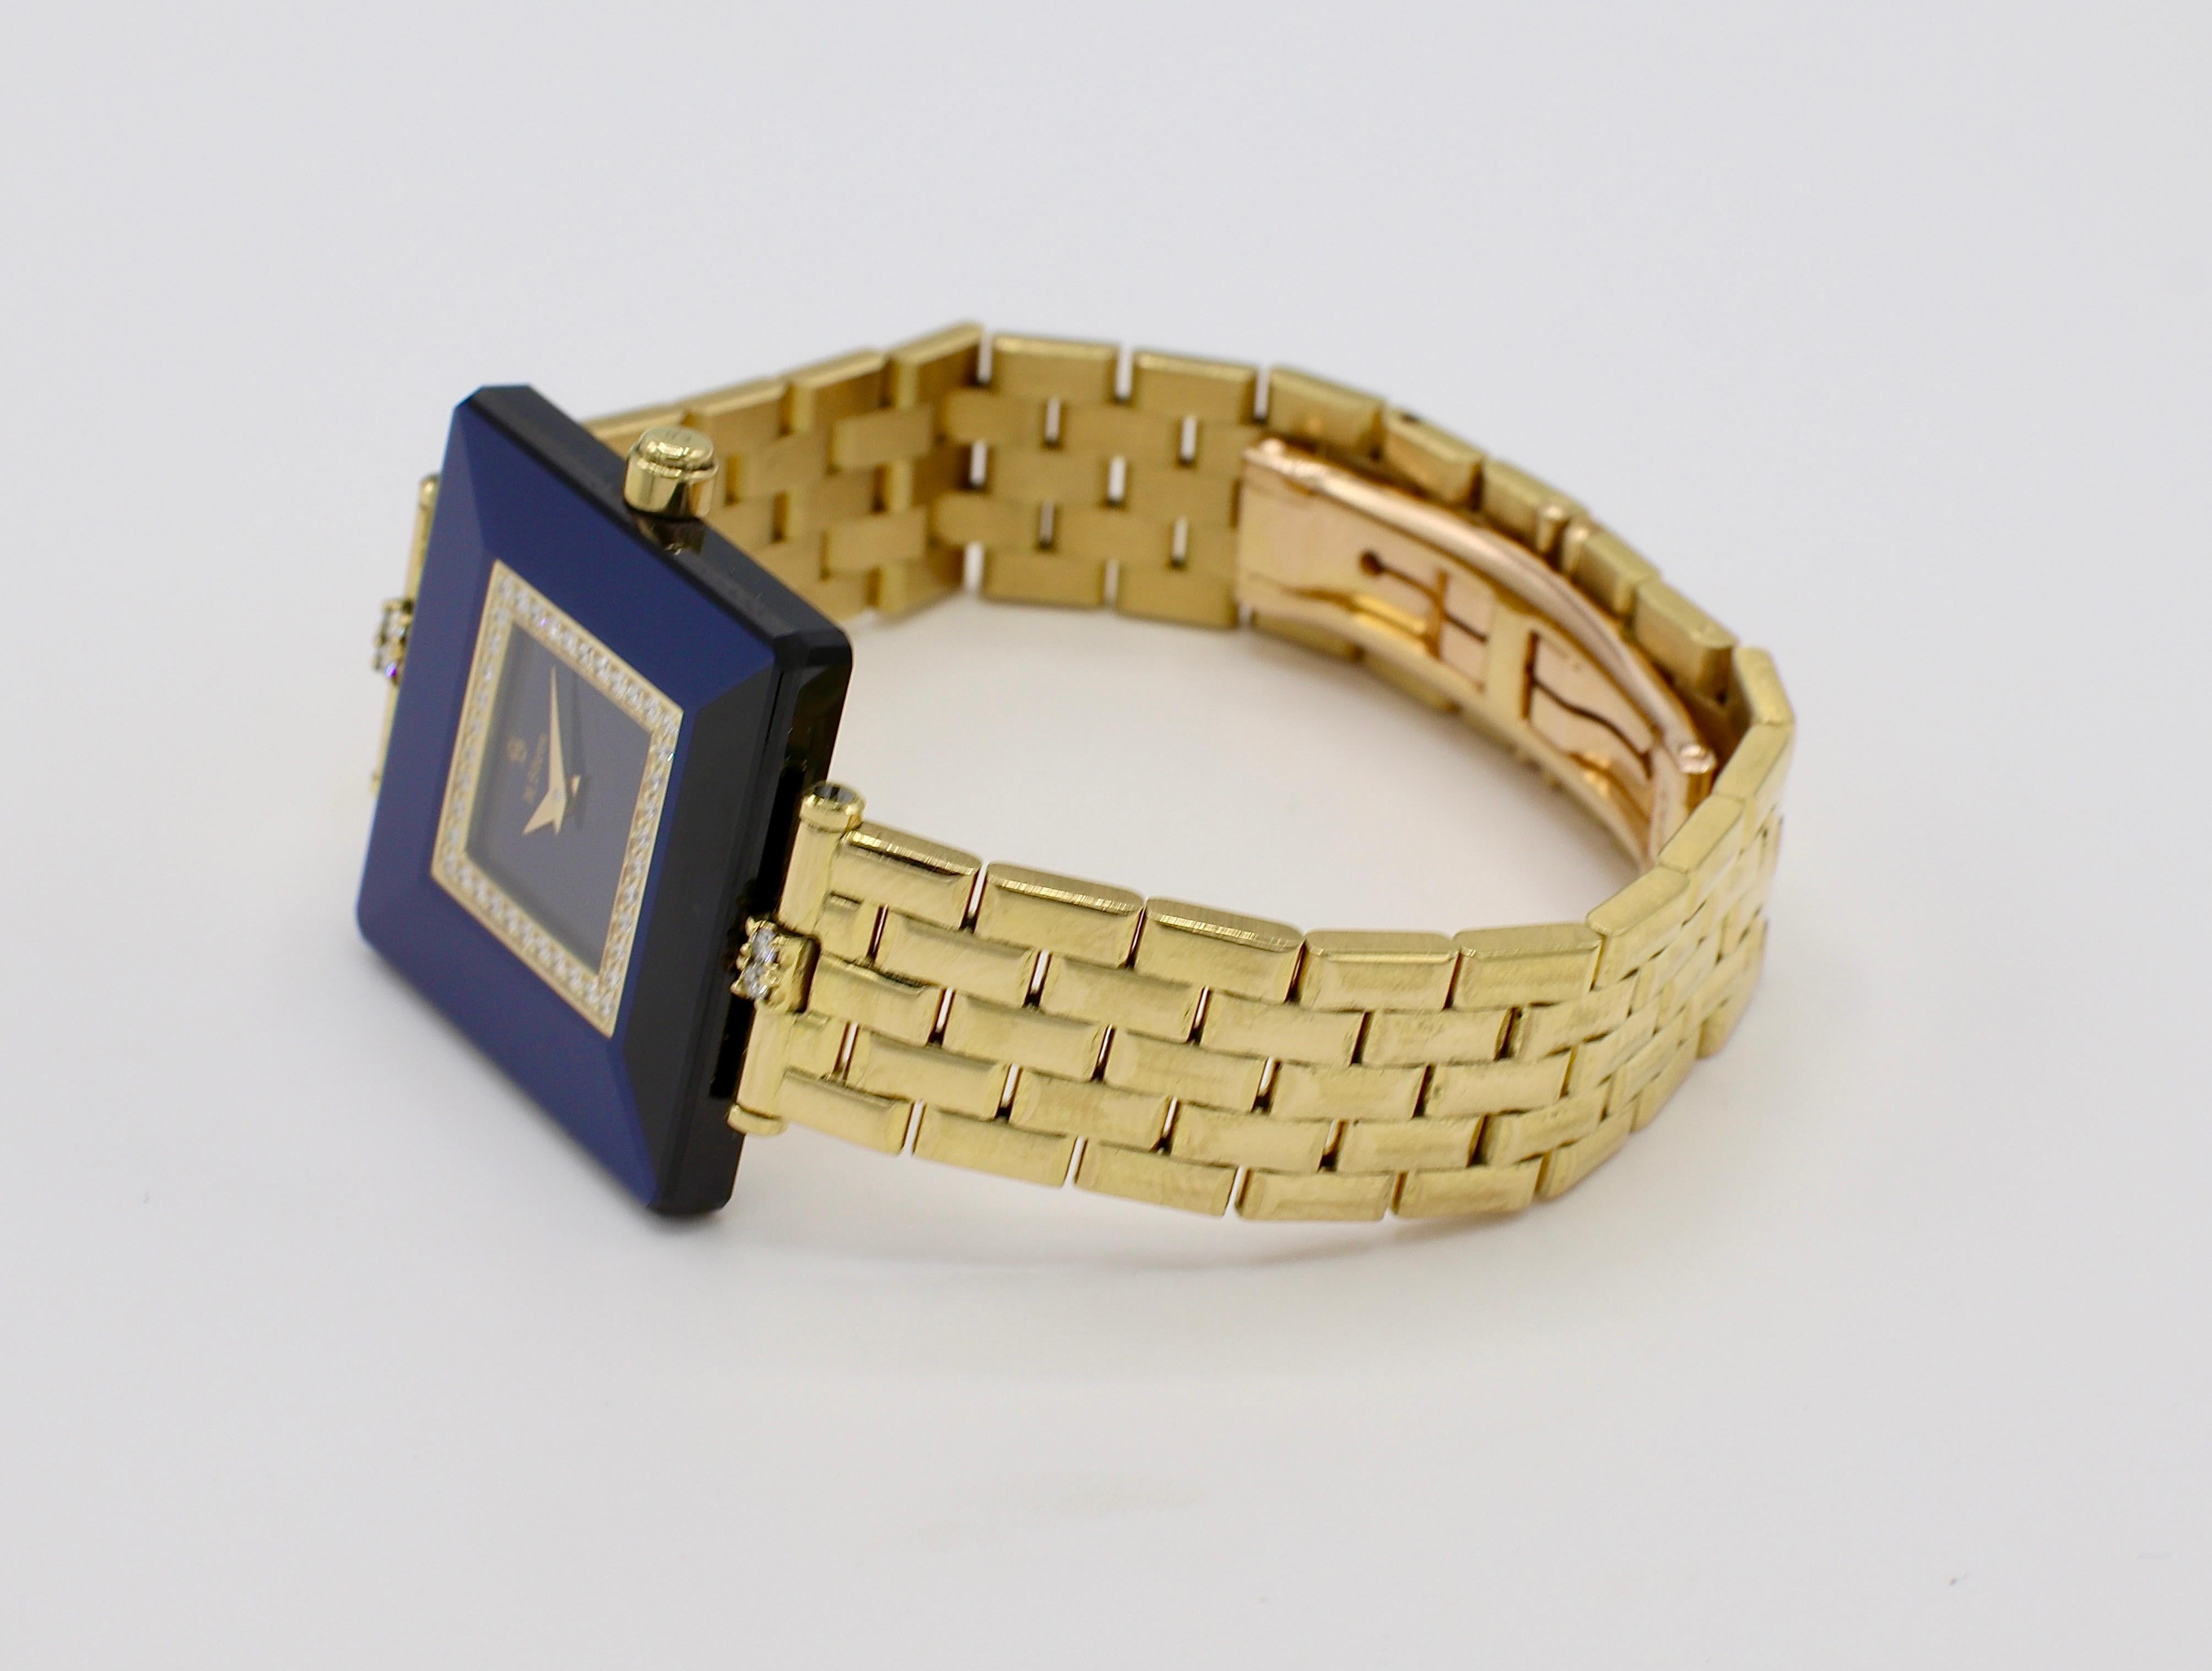 h stern watches blue sapphire price